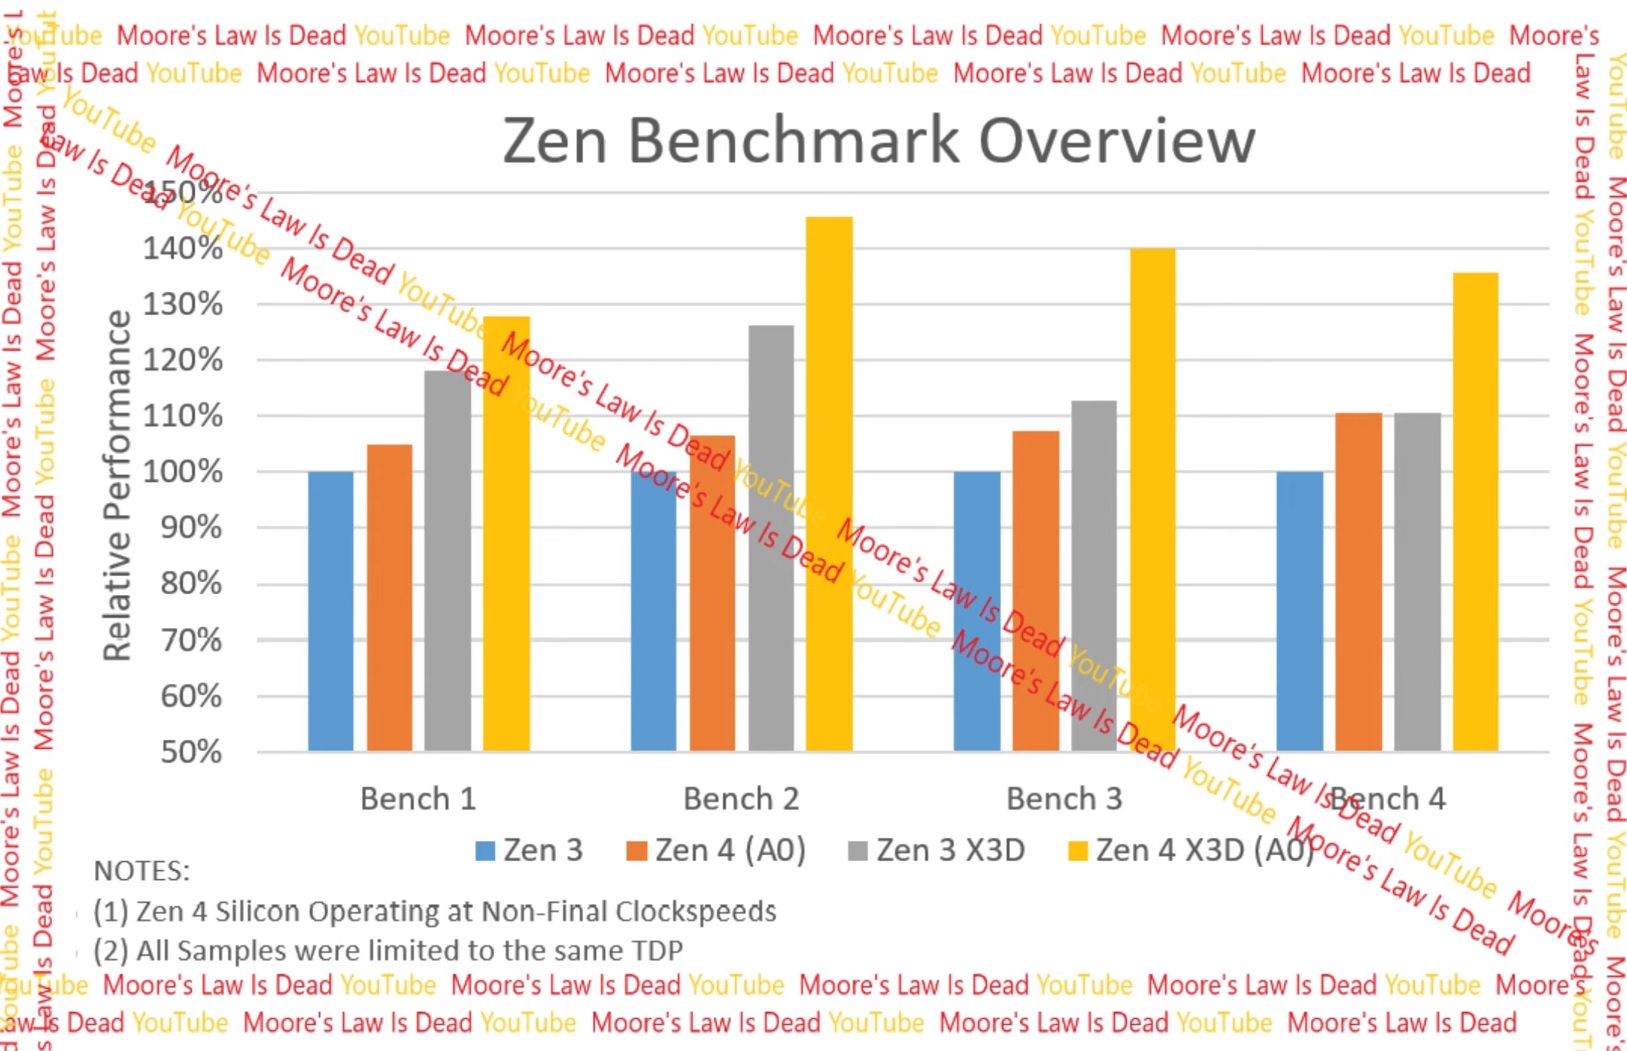 Rumored benchmarks of the Zen 4 and Zen 4 X3D chips.